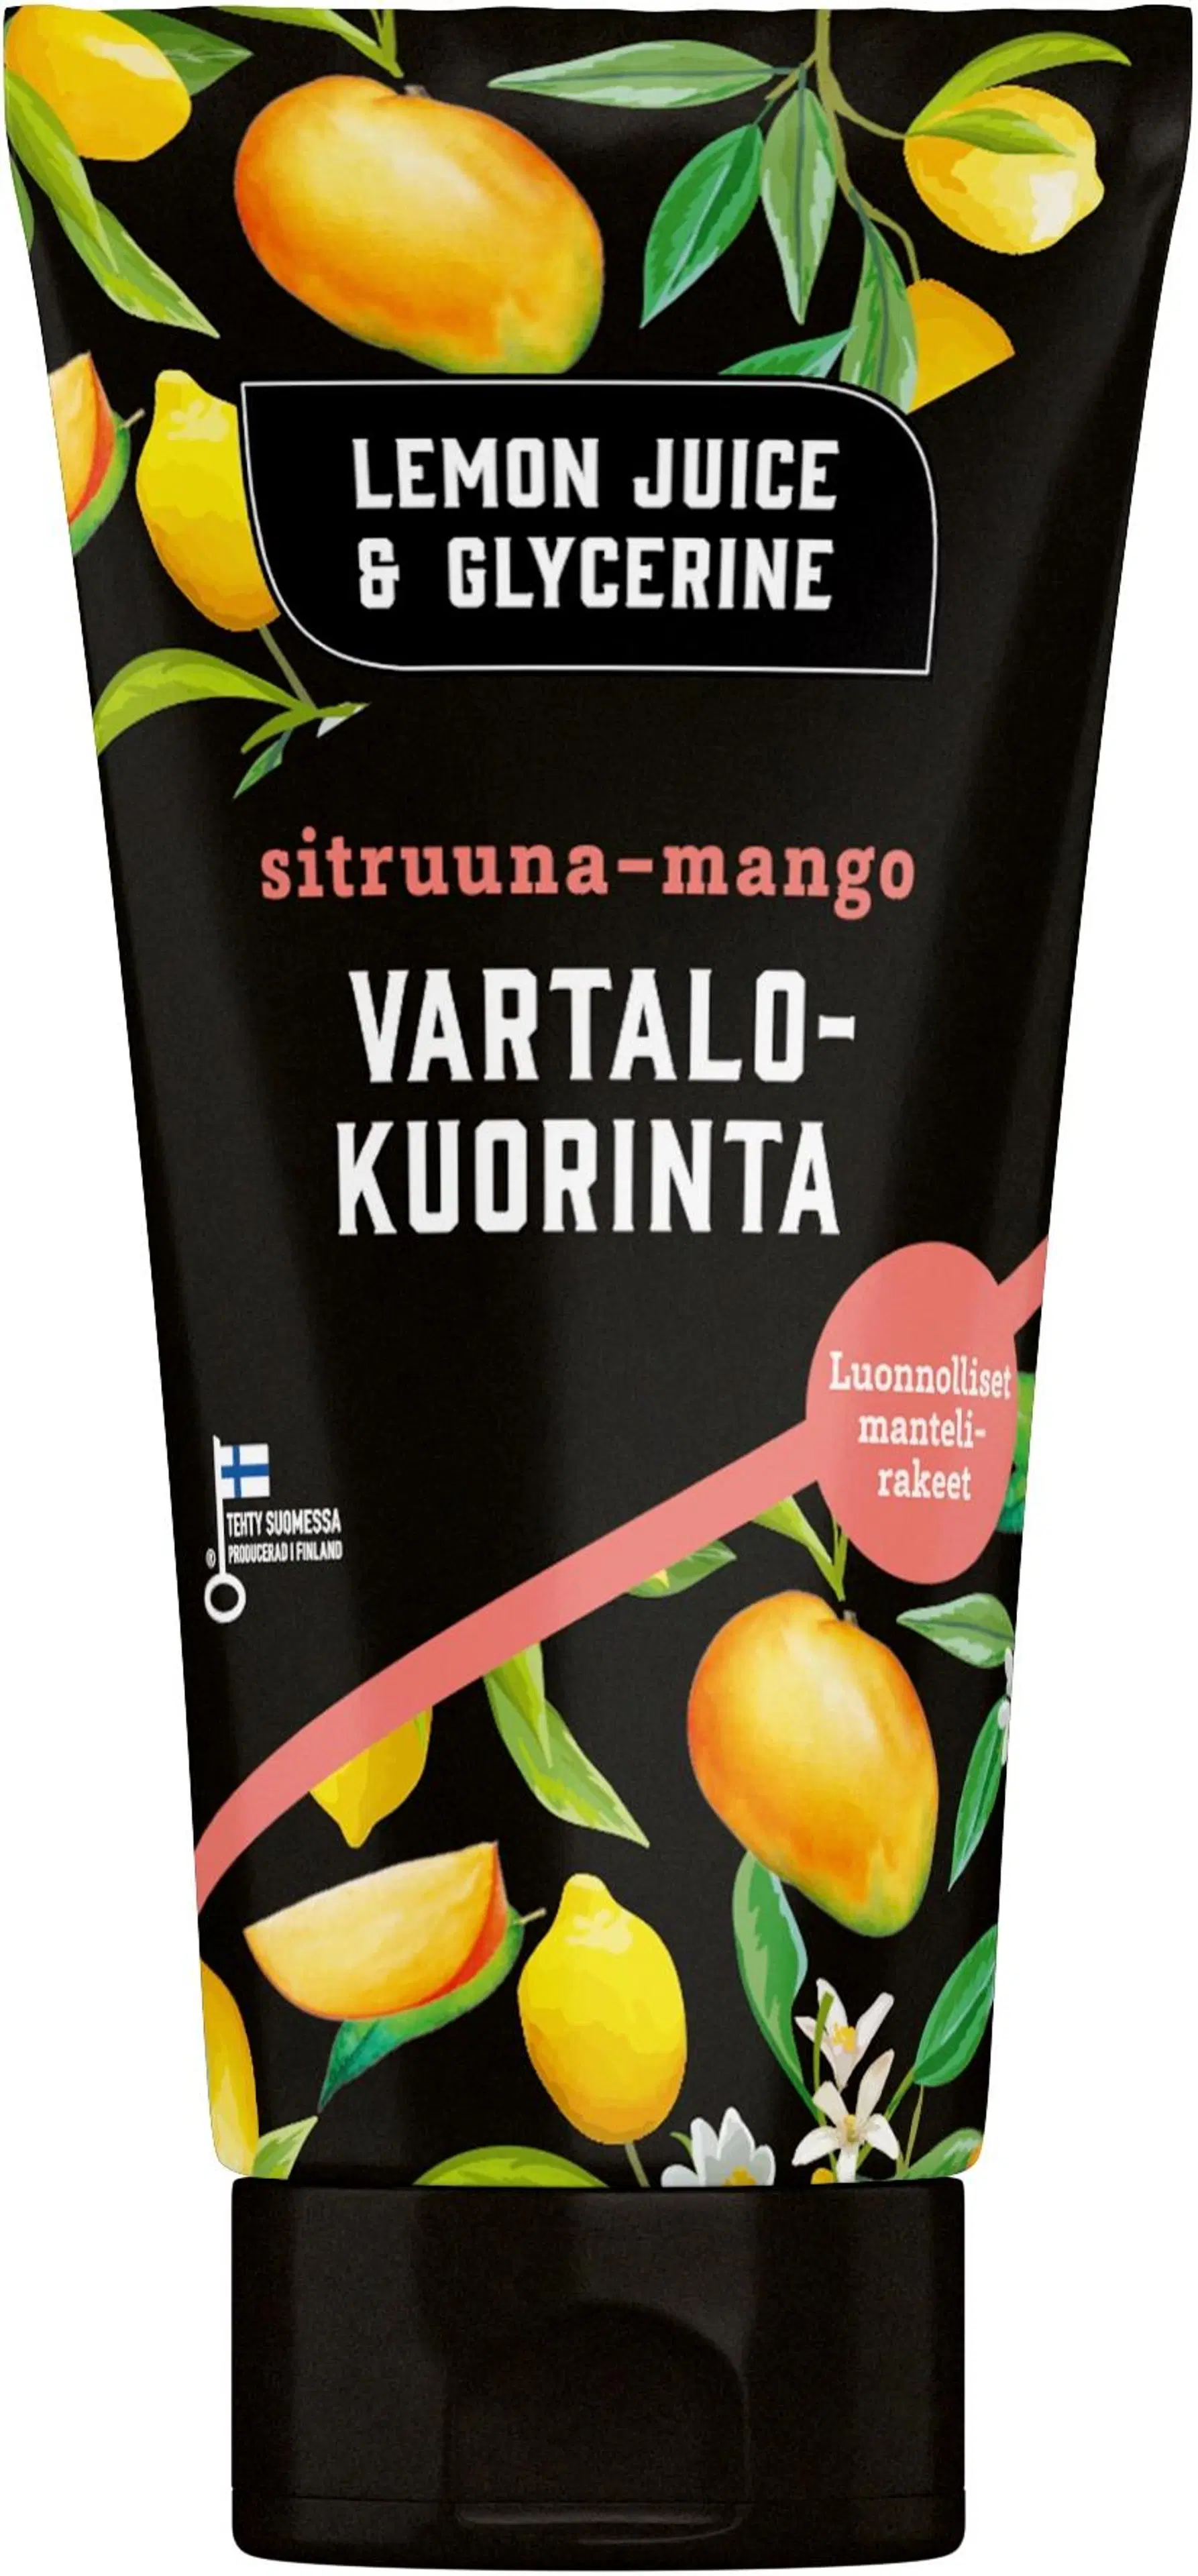 Lemon Juice & Glycerine Vartalokuorinta Sitruuna-Mango 150ml